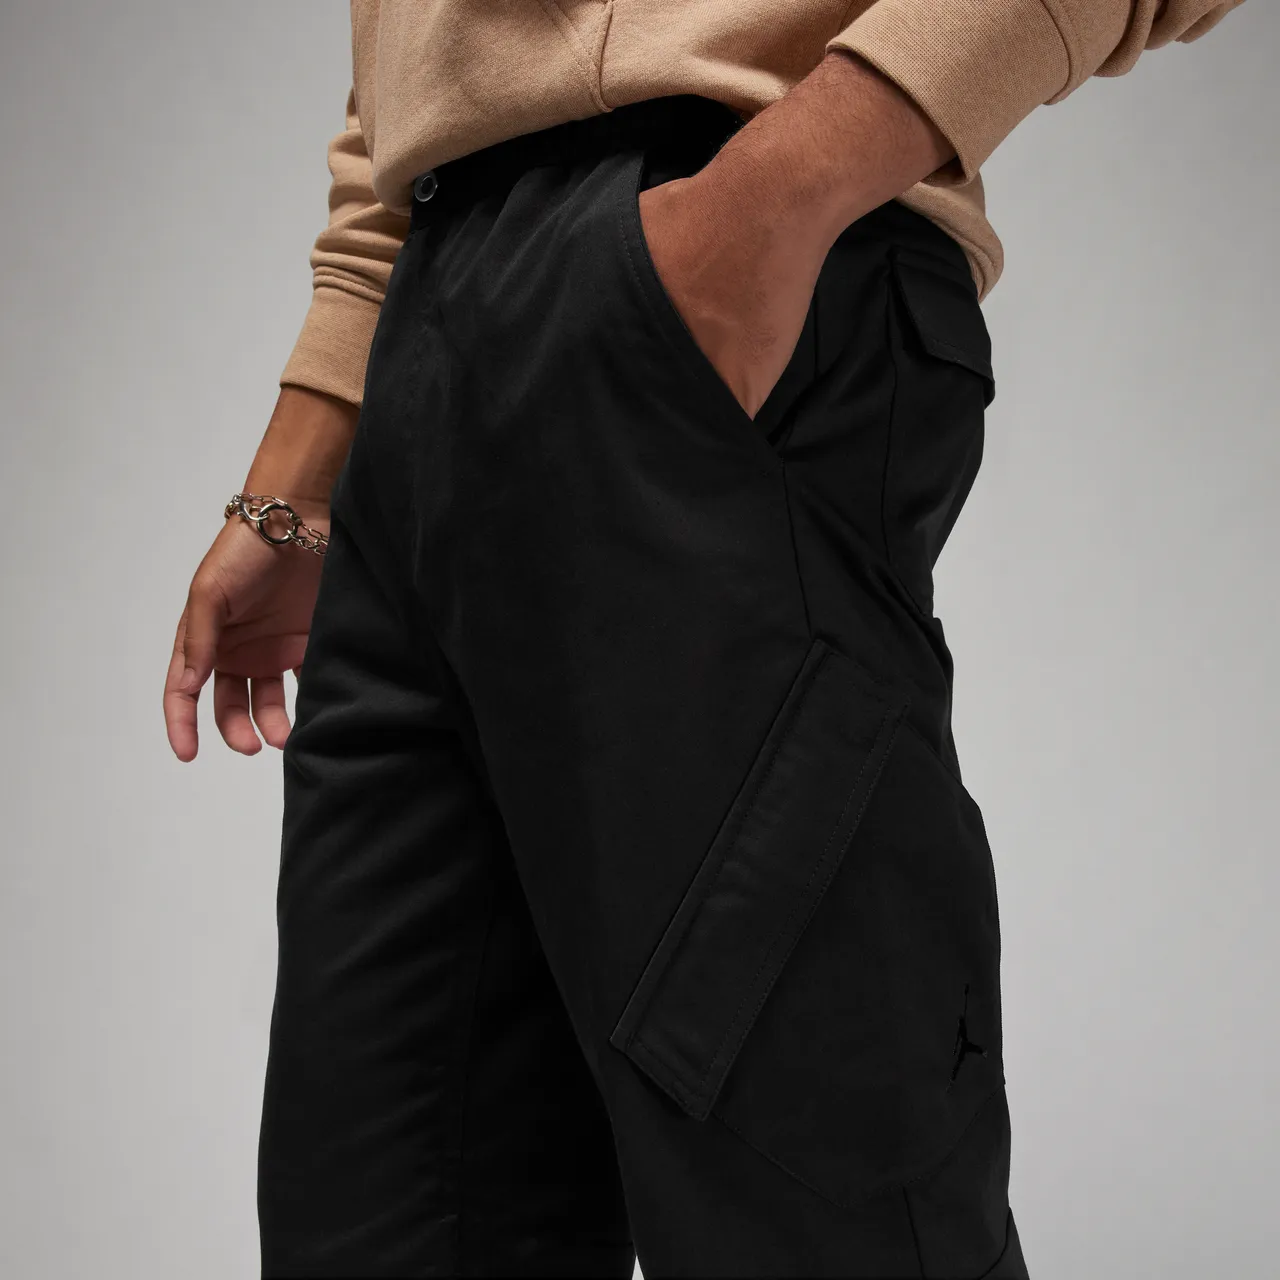 Jordan Essentials Men's Chicago Trousers - Black - Polyester